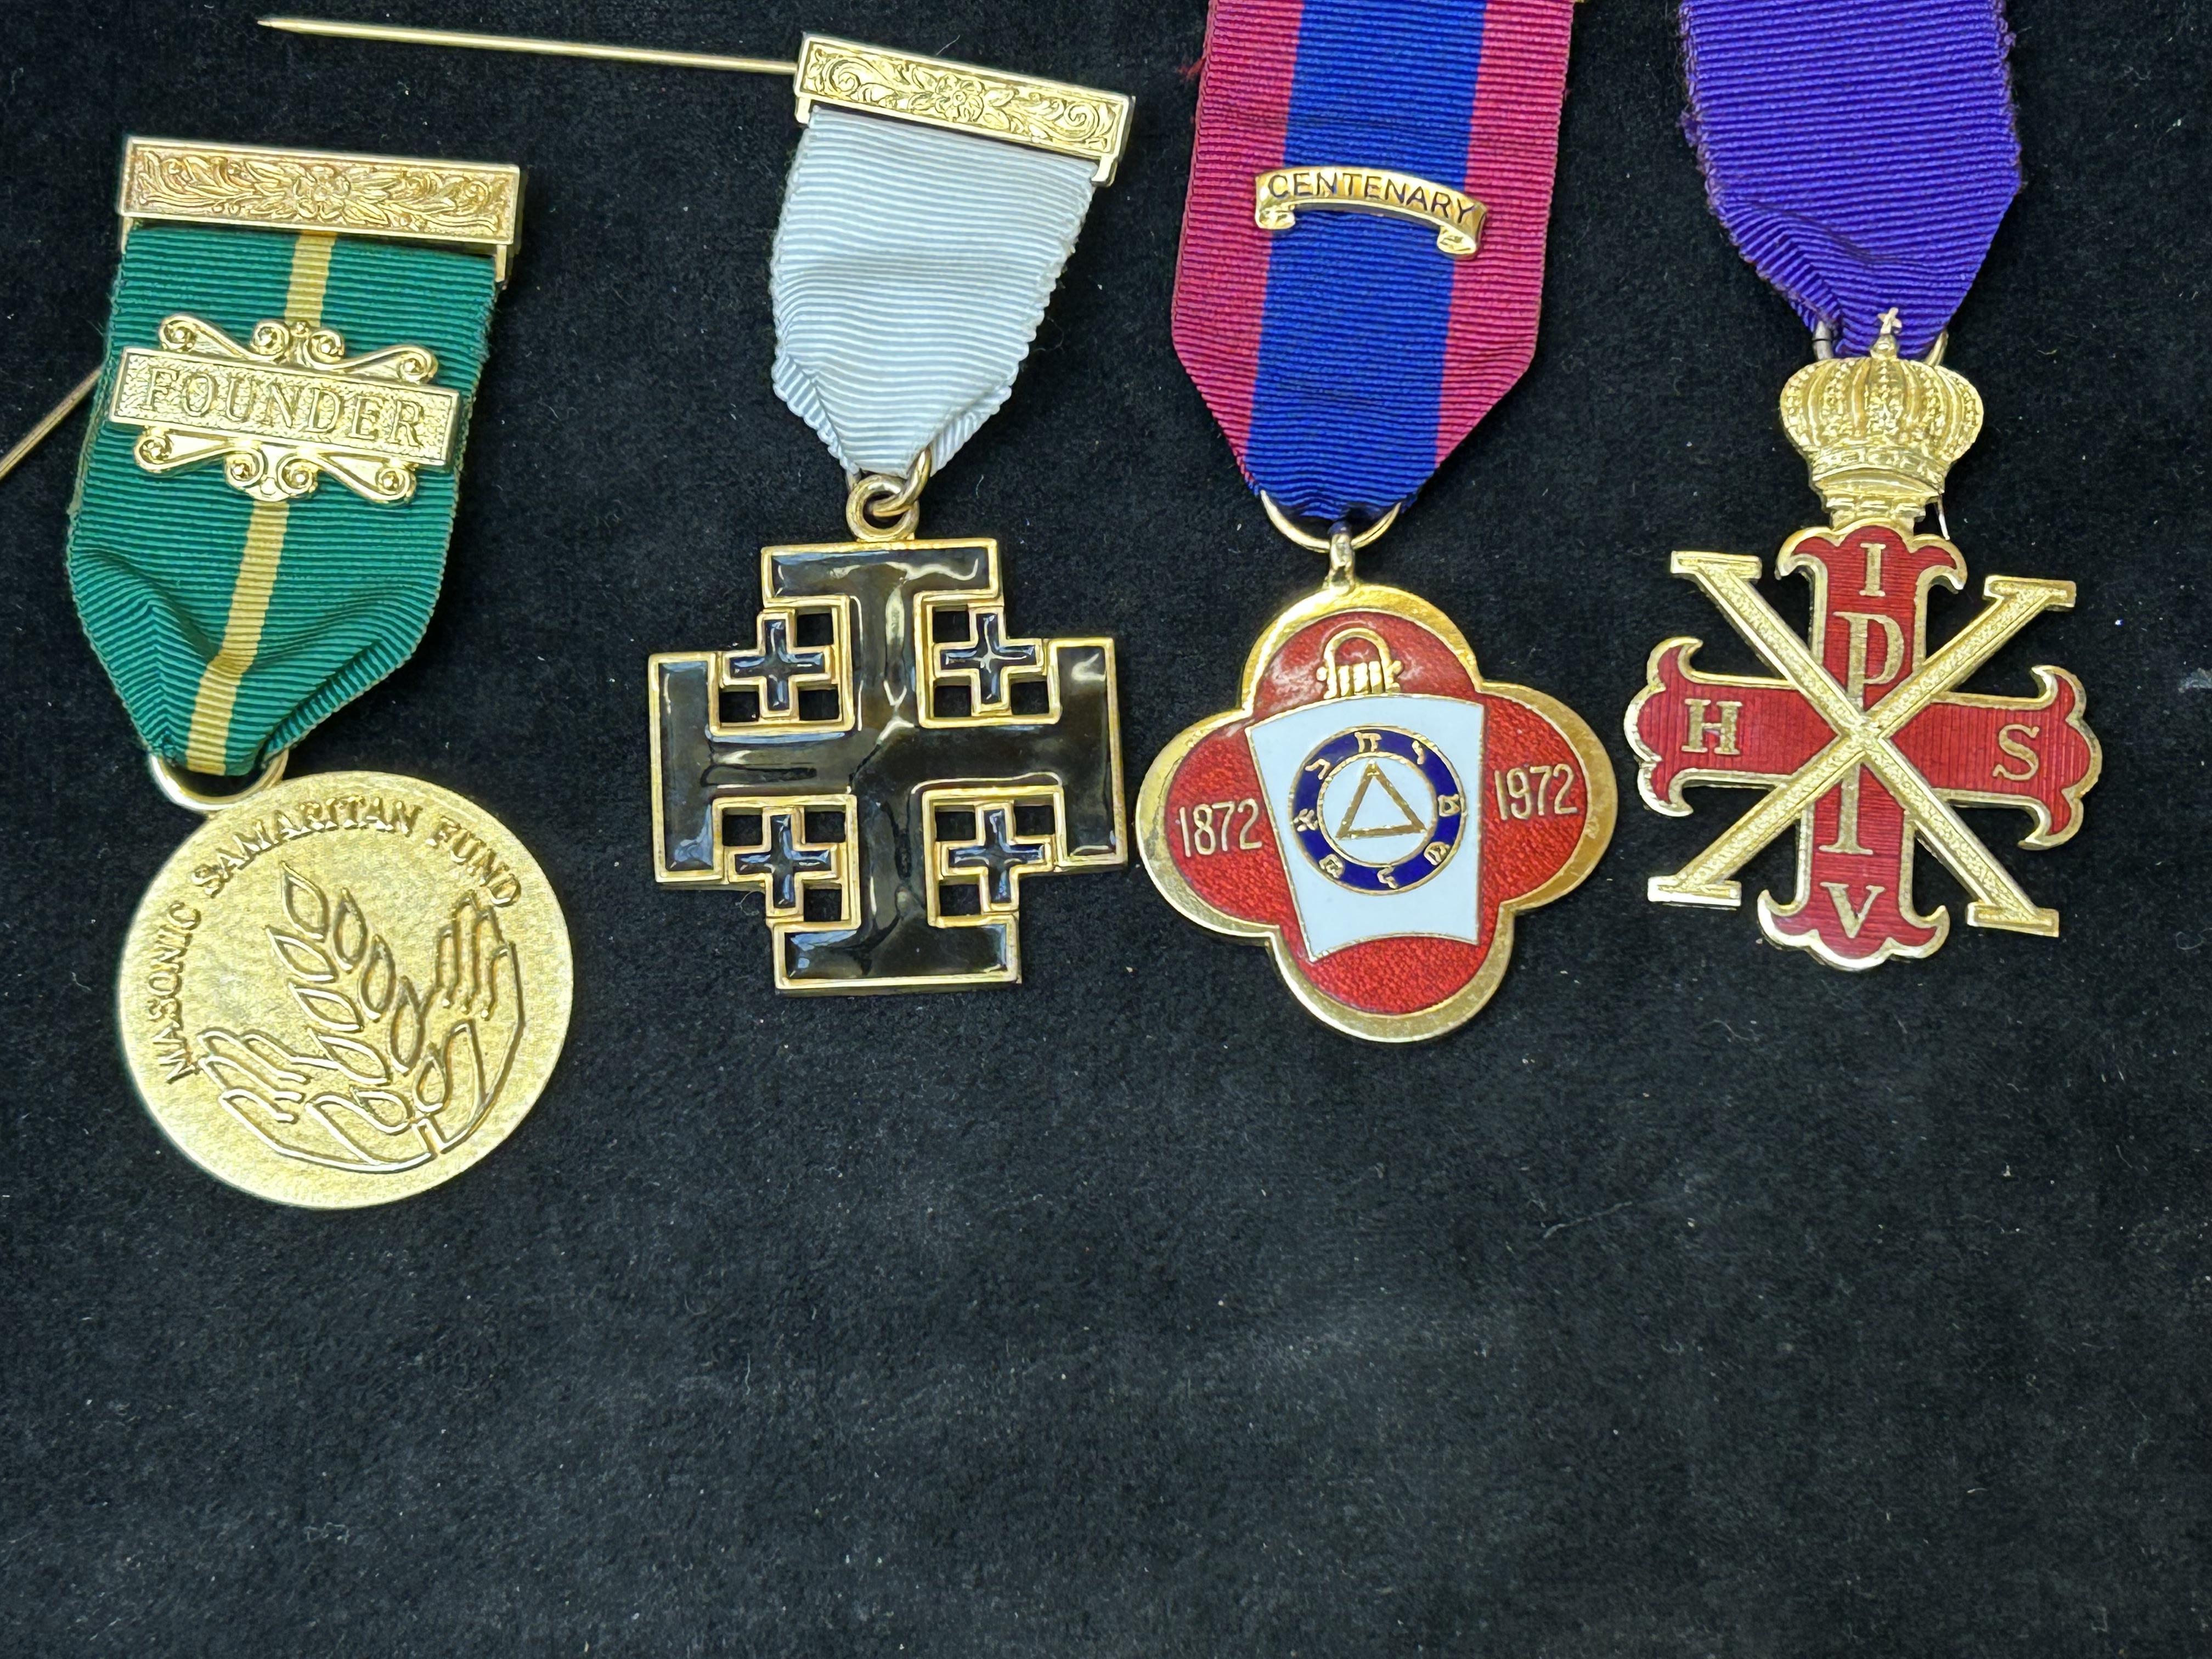 4 Masonic medals